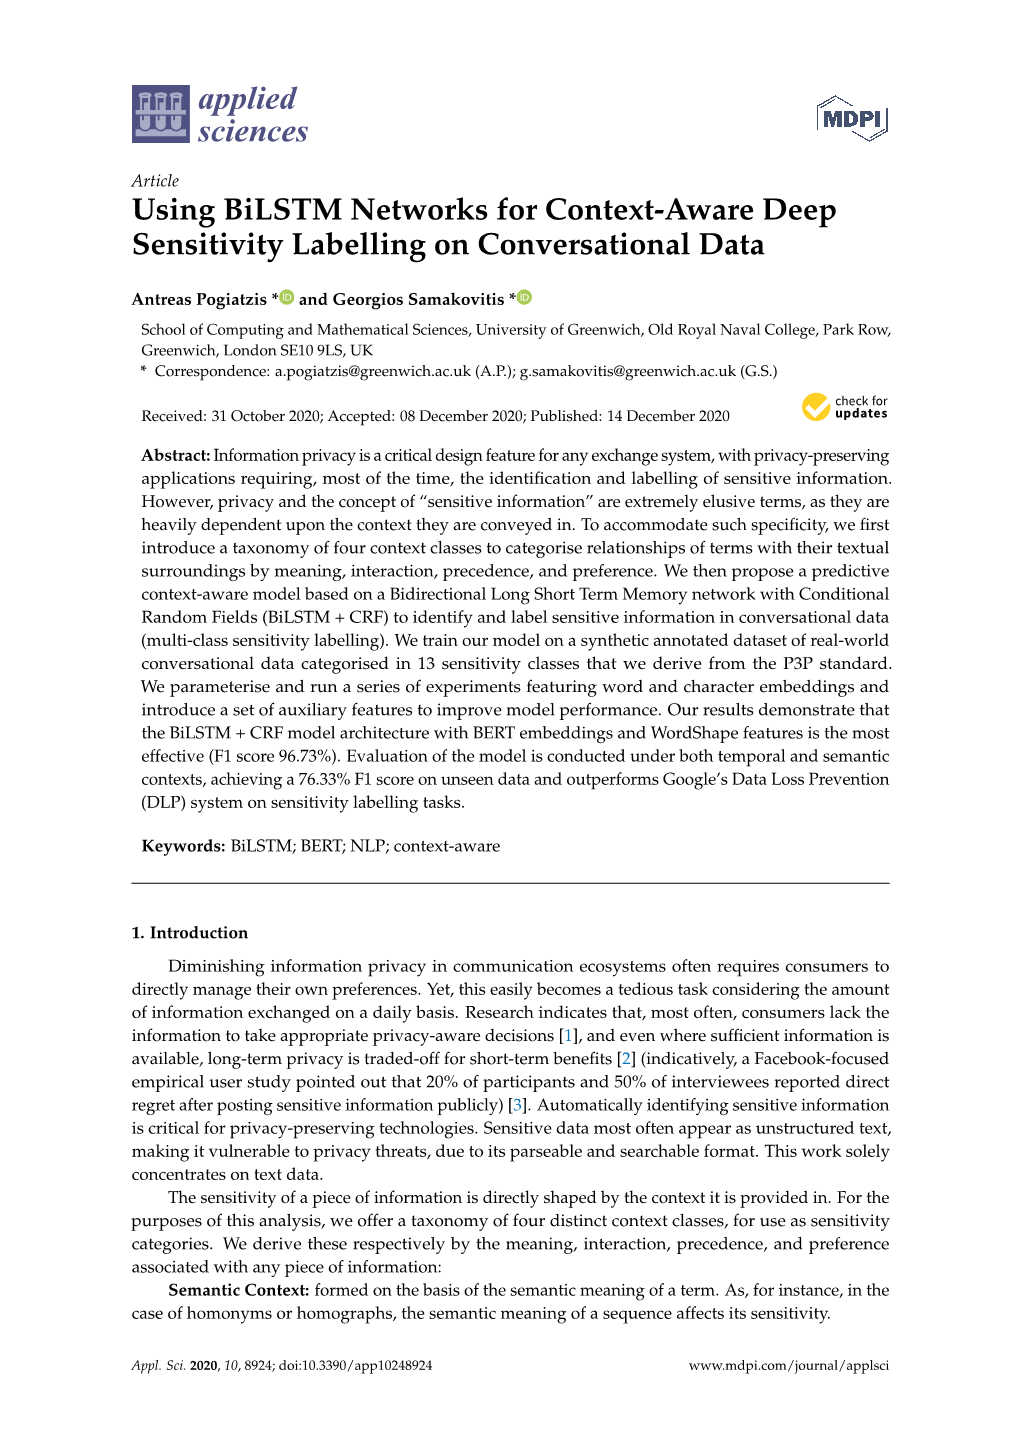 Using Bilstm Networks for Context-Aware Deep Sensitivity Labelling on Conversational Data